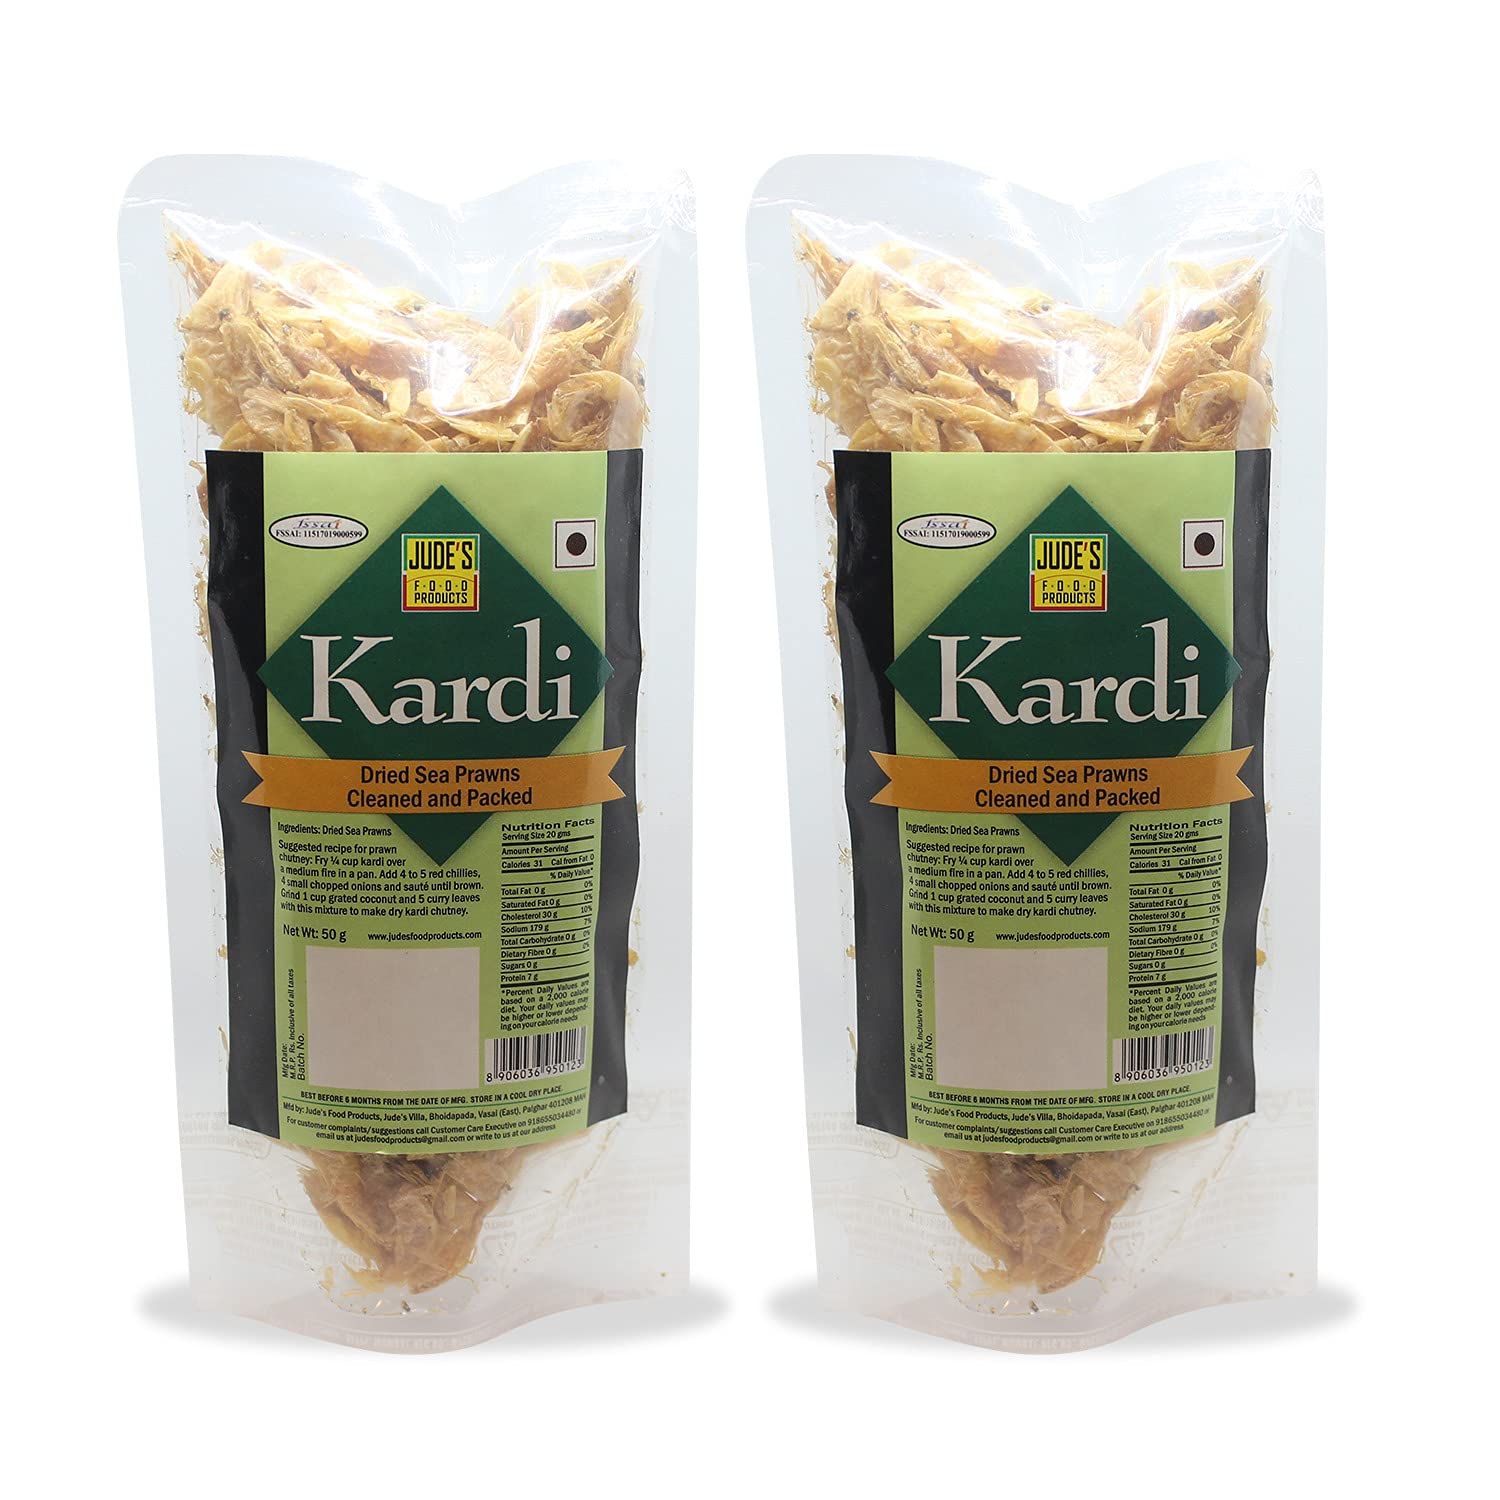 Jude's Food Products Kardi Dried Sea Prawns Image